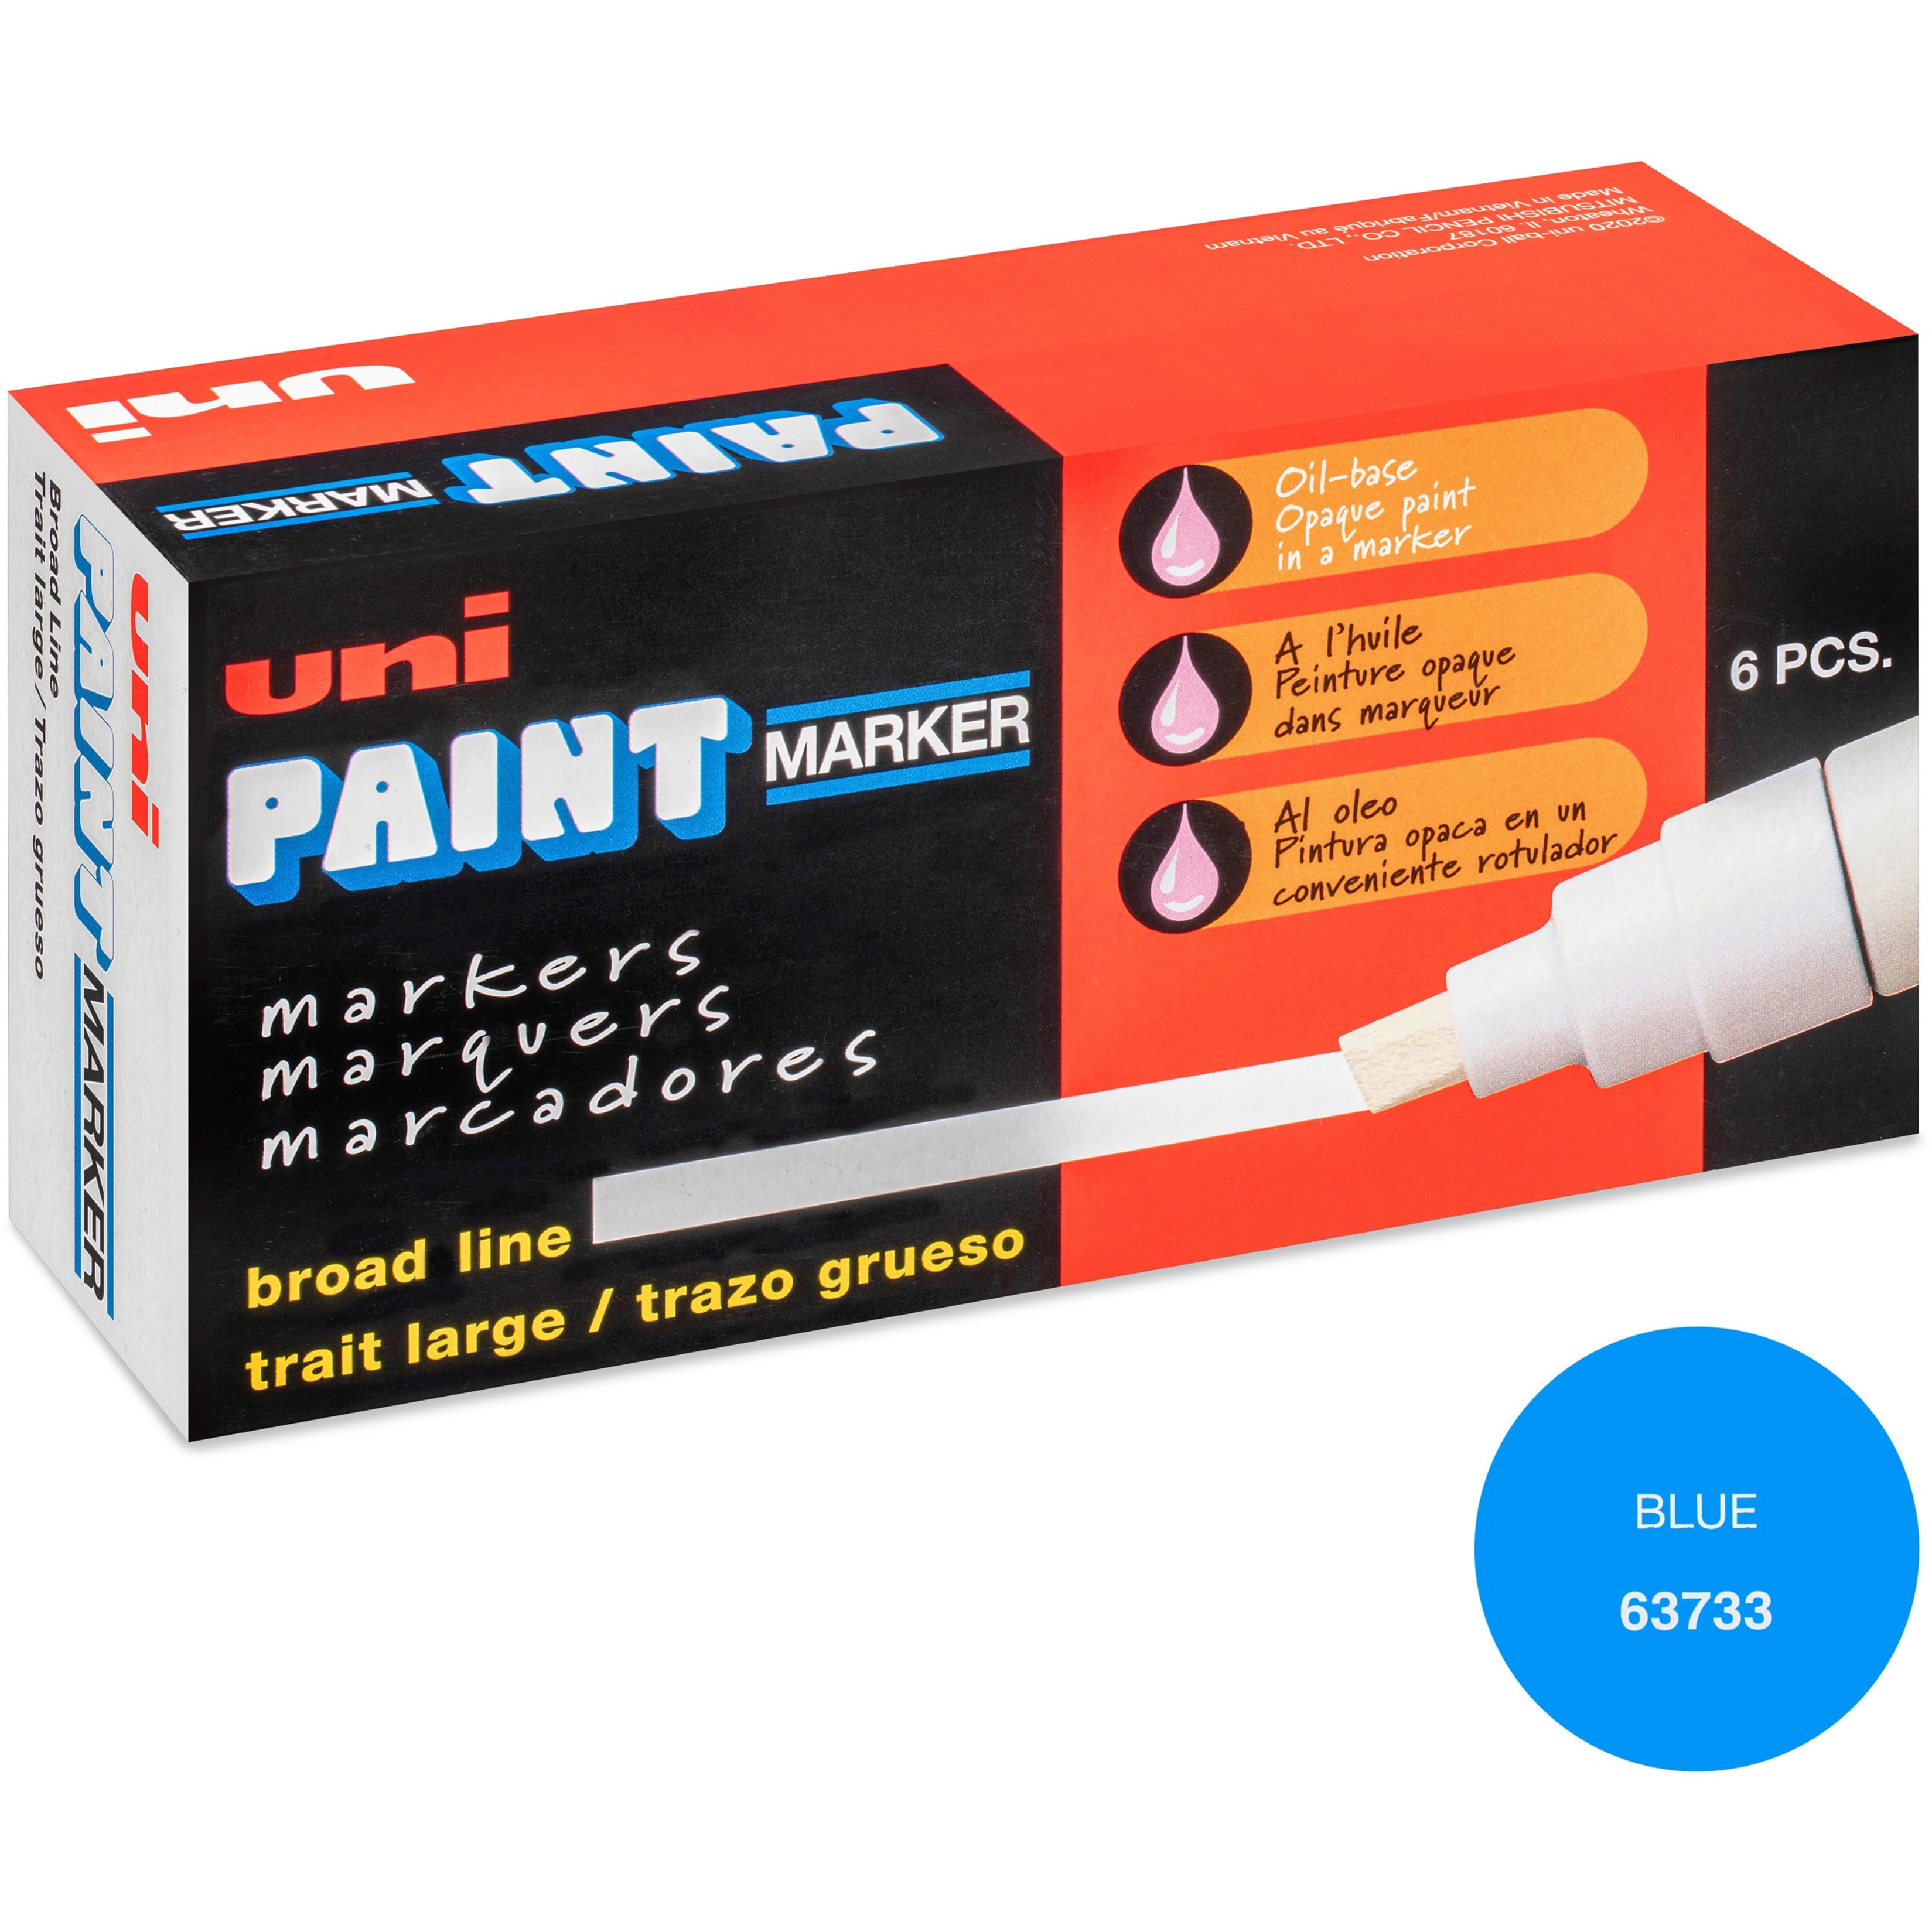 Sanford SAN63613 uni-Paint uni-Paint Marker, Medium Point, White